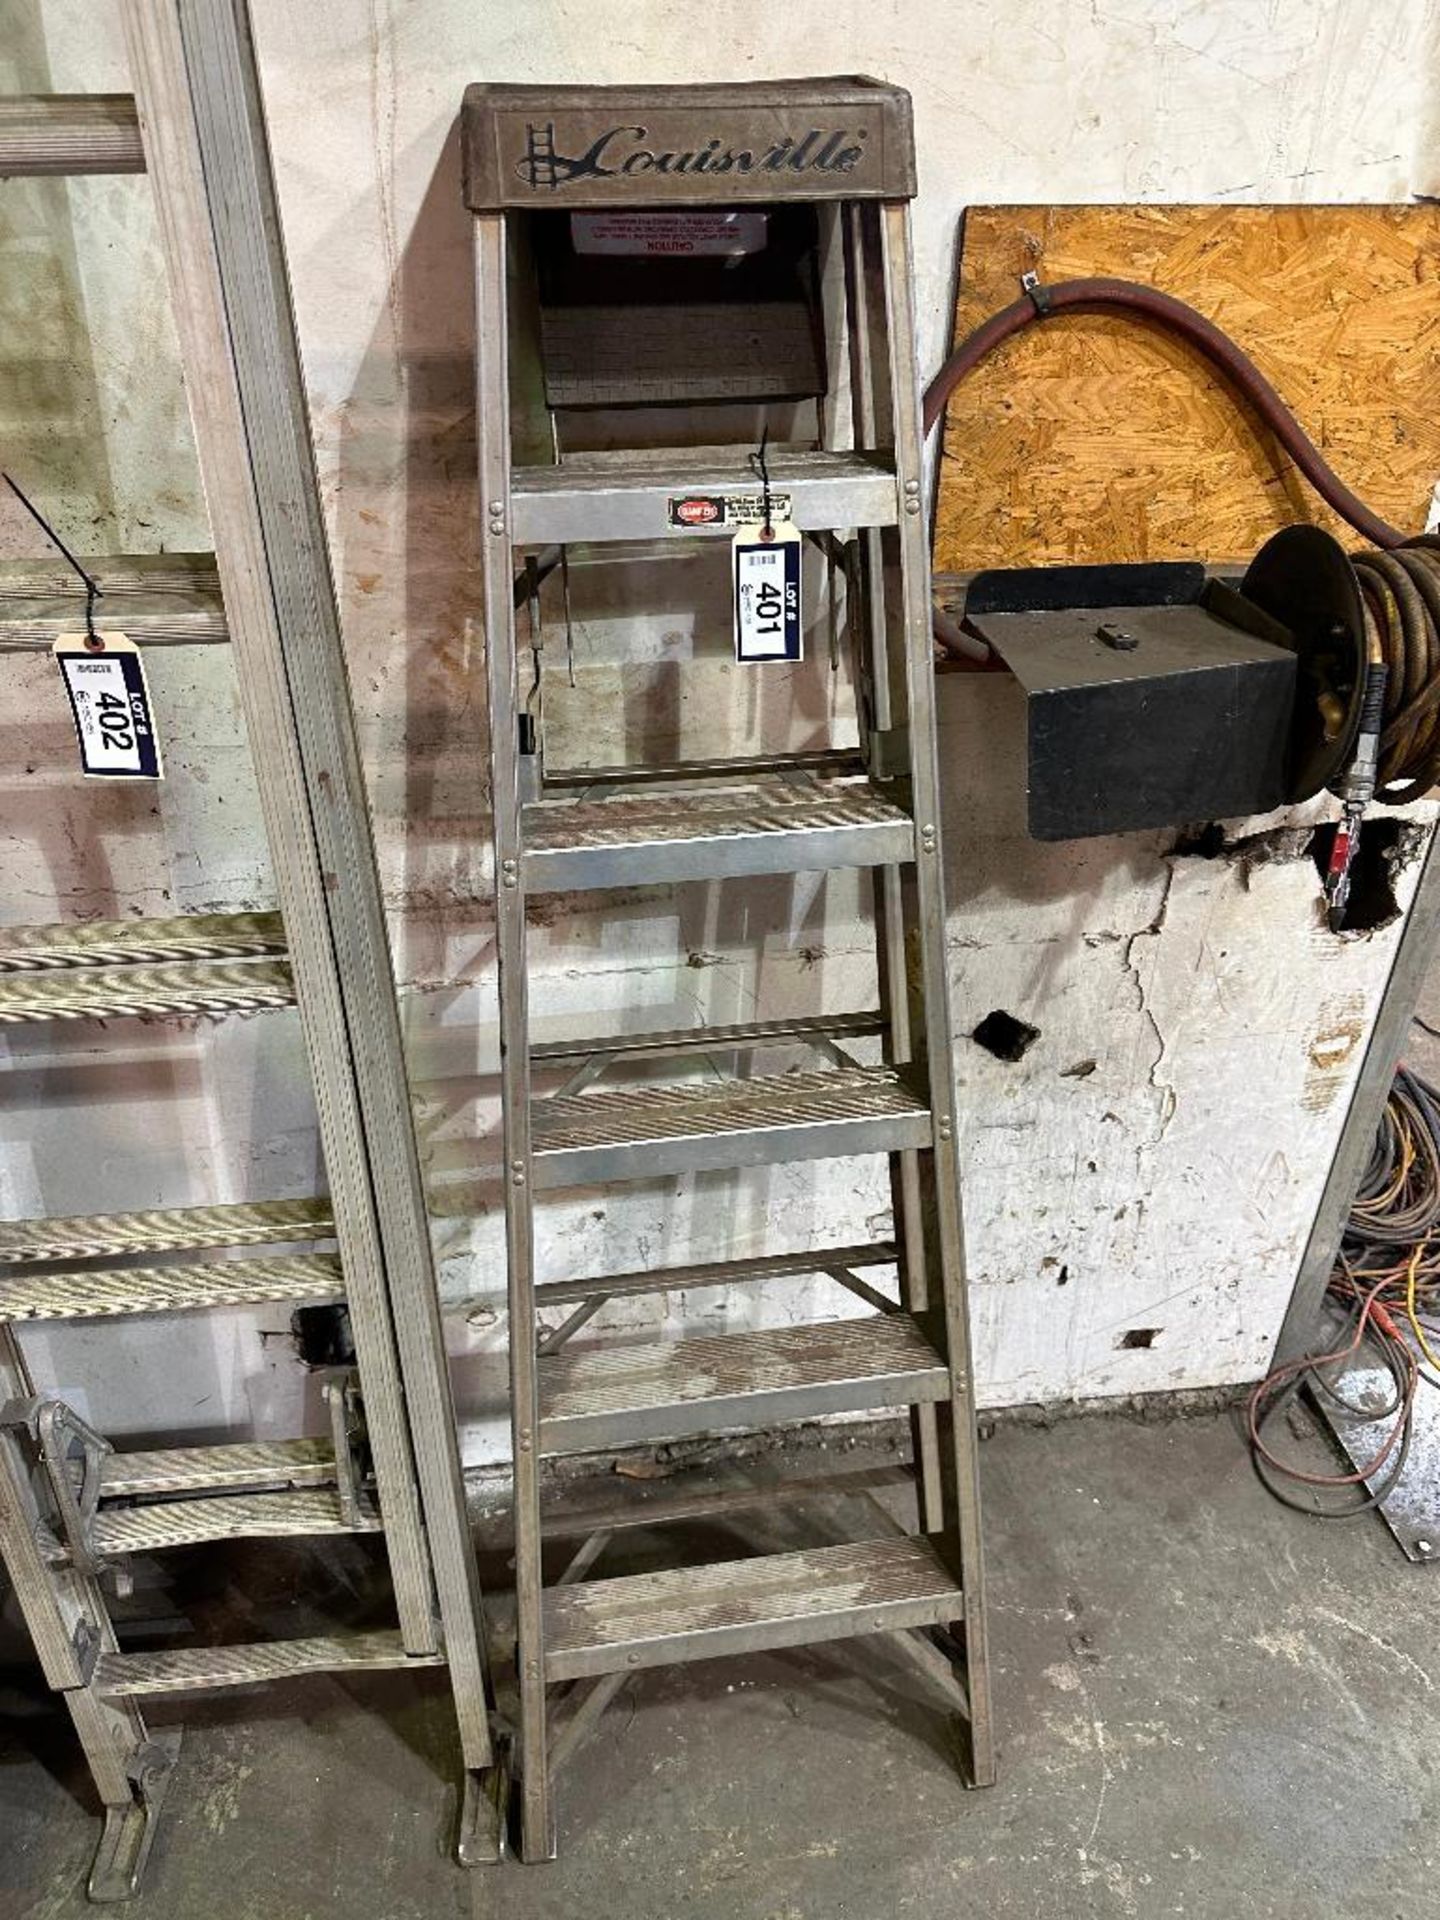 Louisville 6' Aluminum Step Ladder - Image 3 of 3